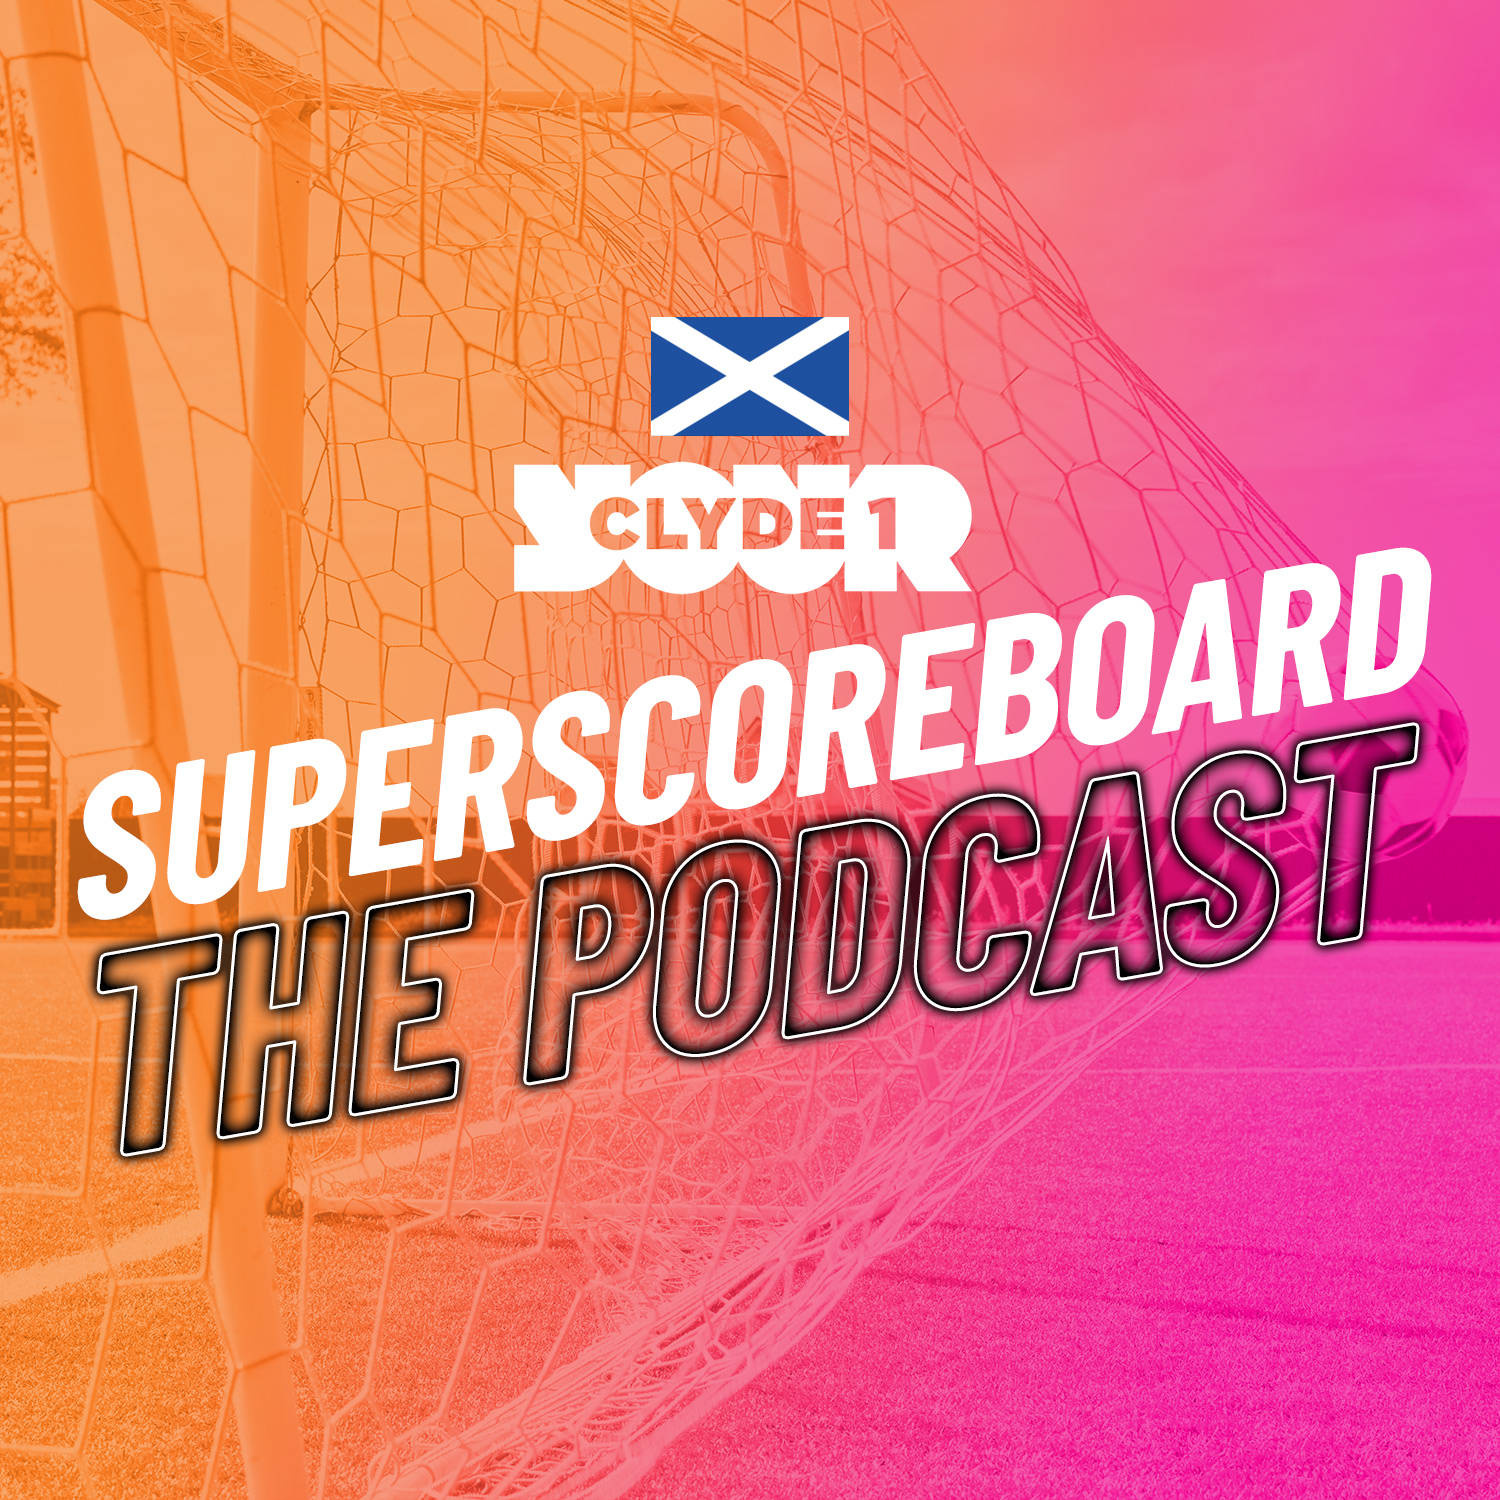 Saturday 9th December Clyde 1 Superscoreboard – Part 1